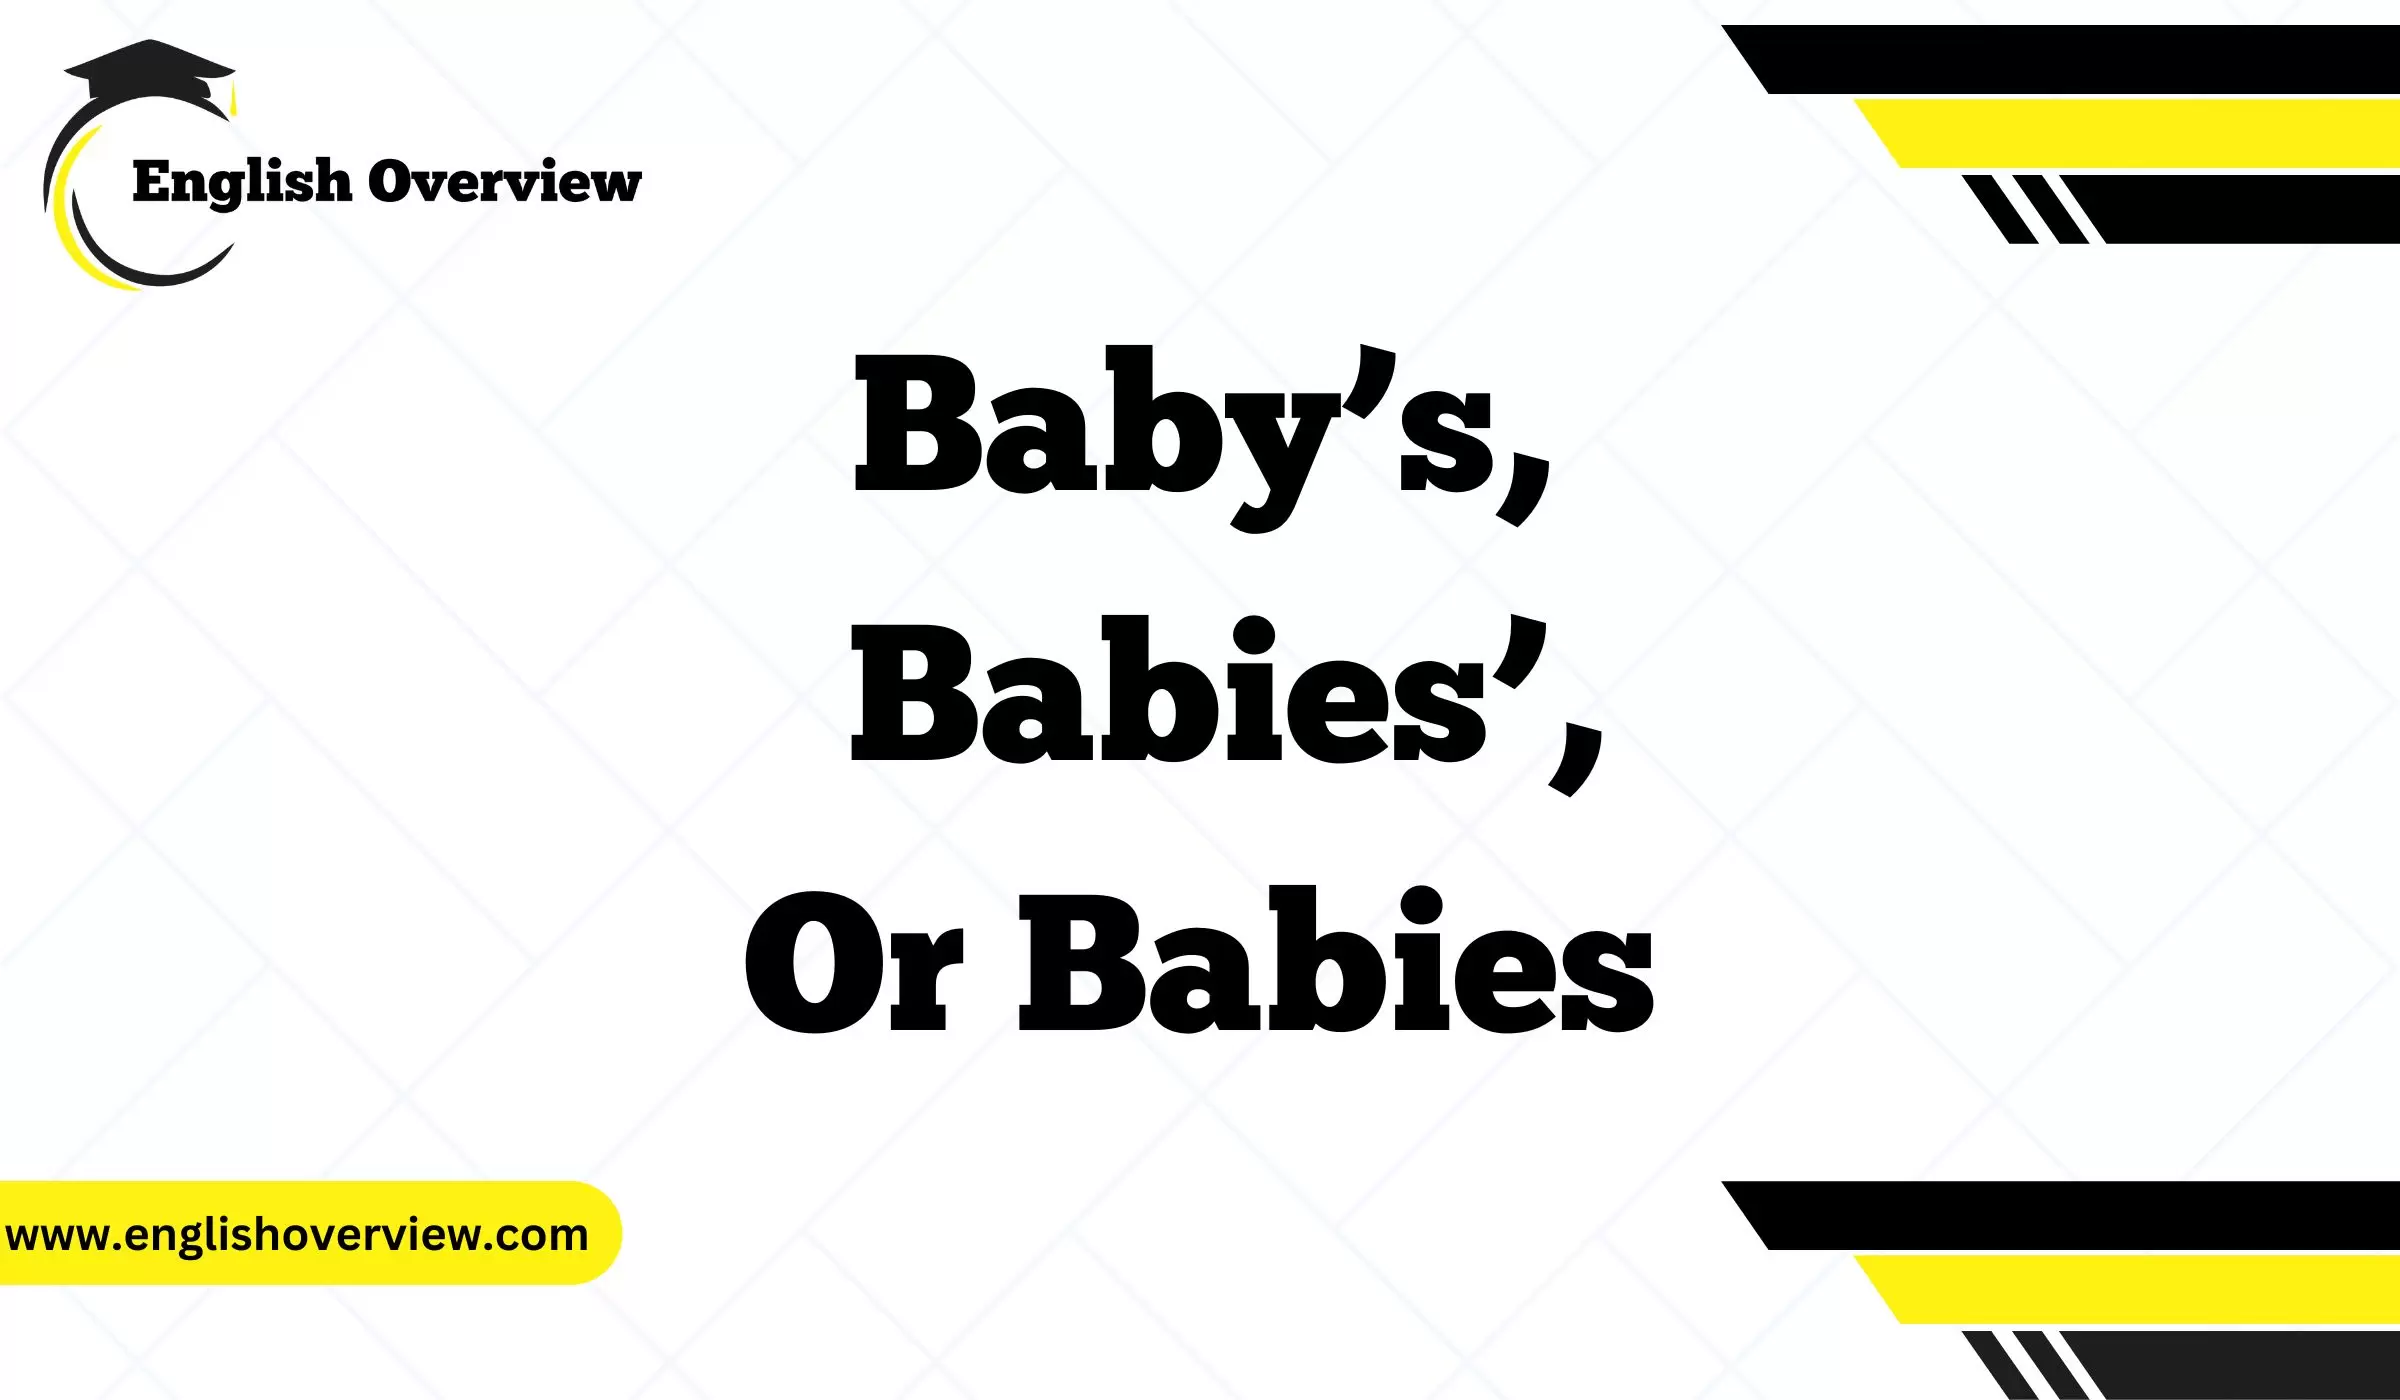 Baby’s, Babies’, or Babies?